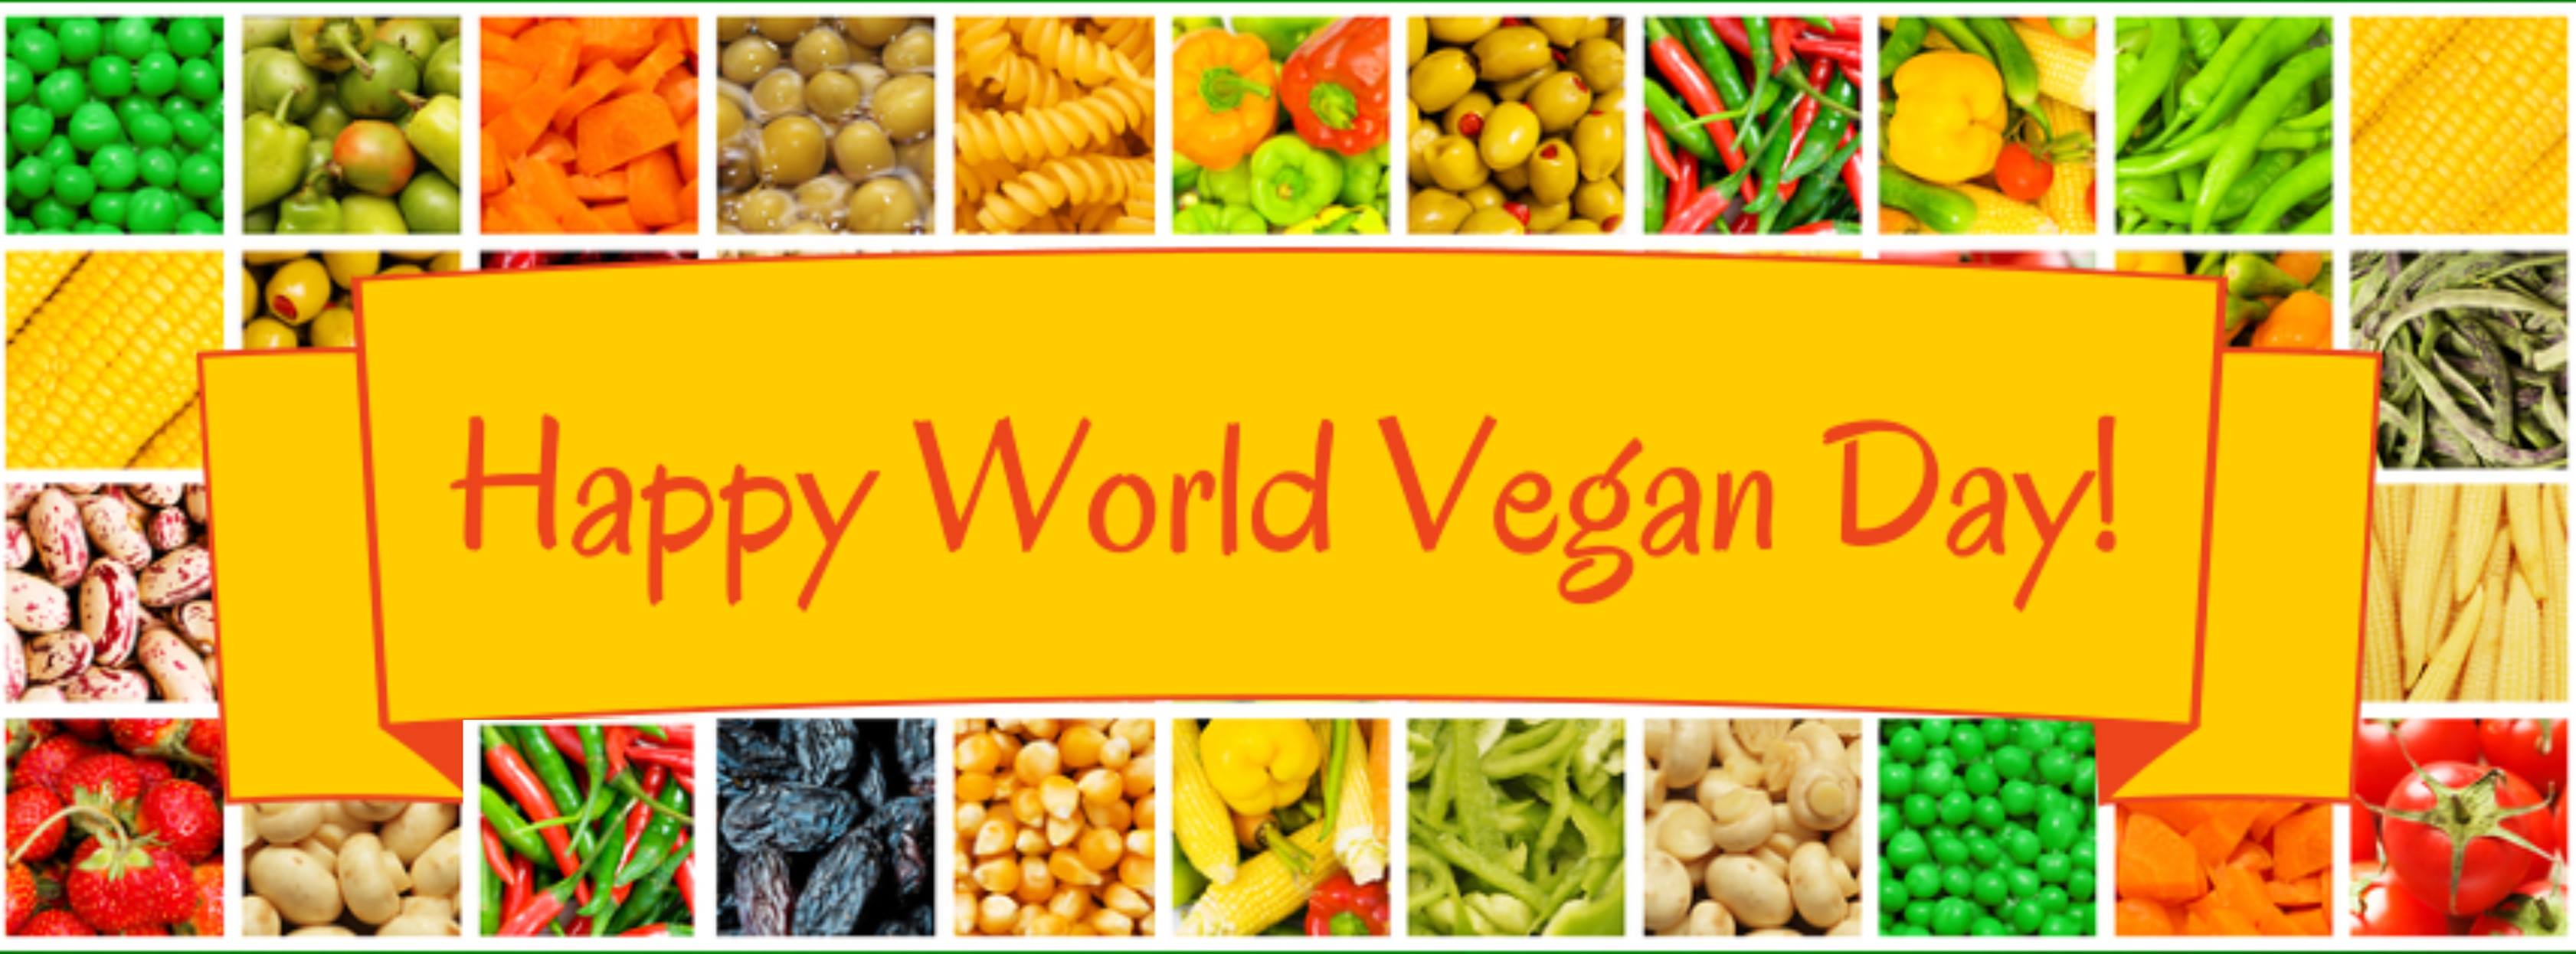 happy world vegan day banner